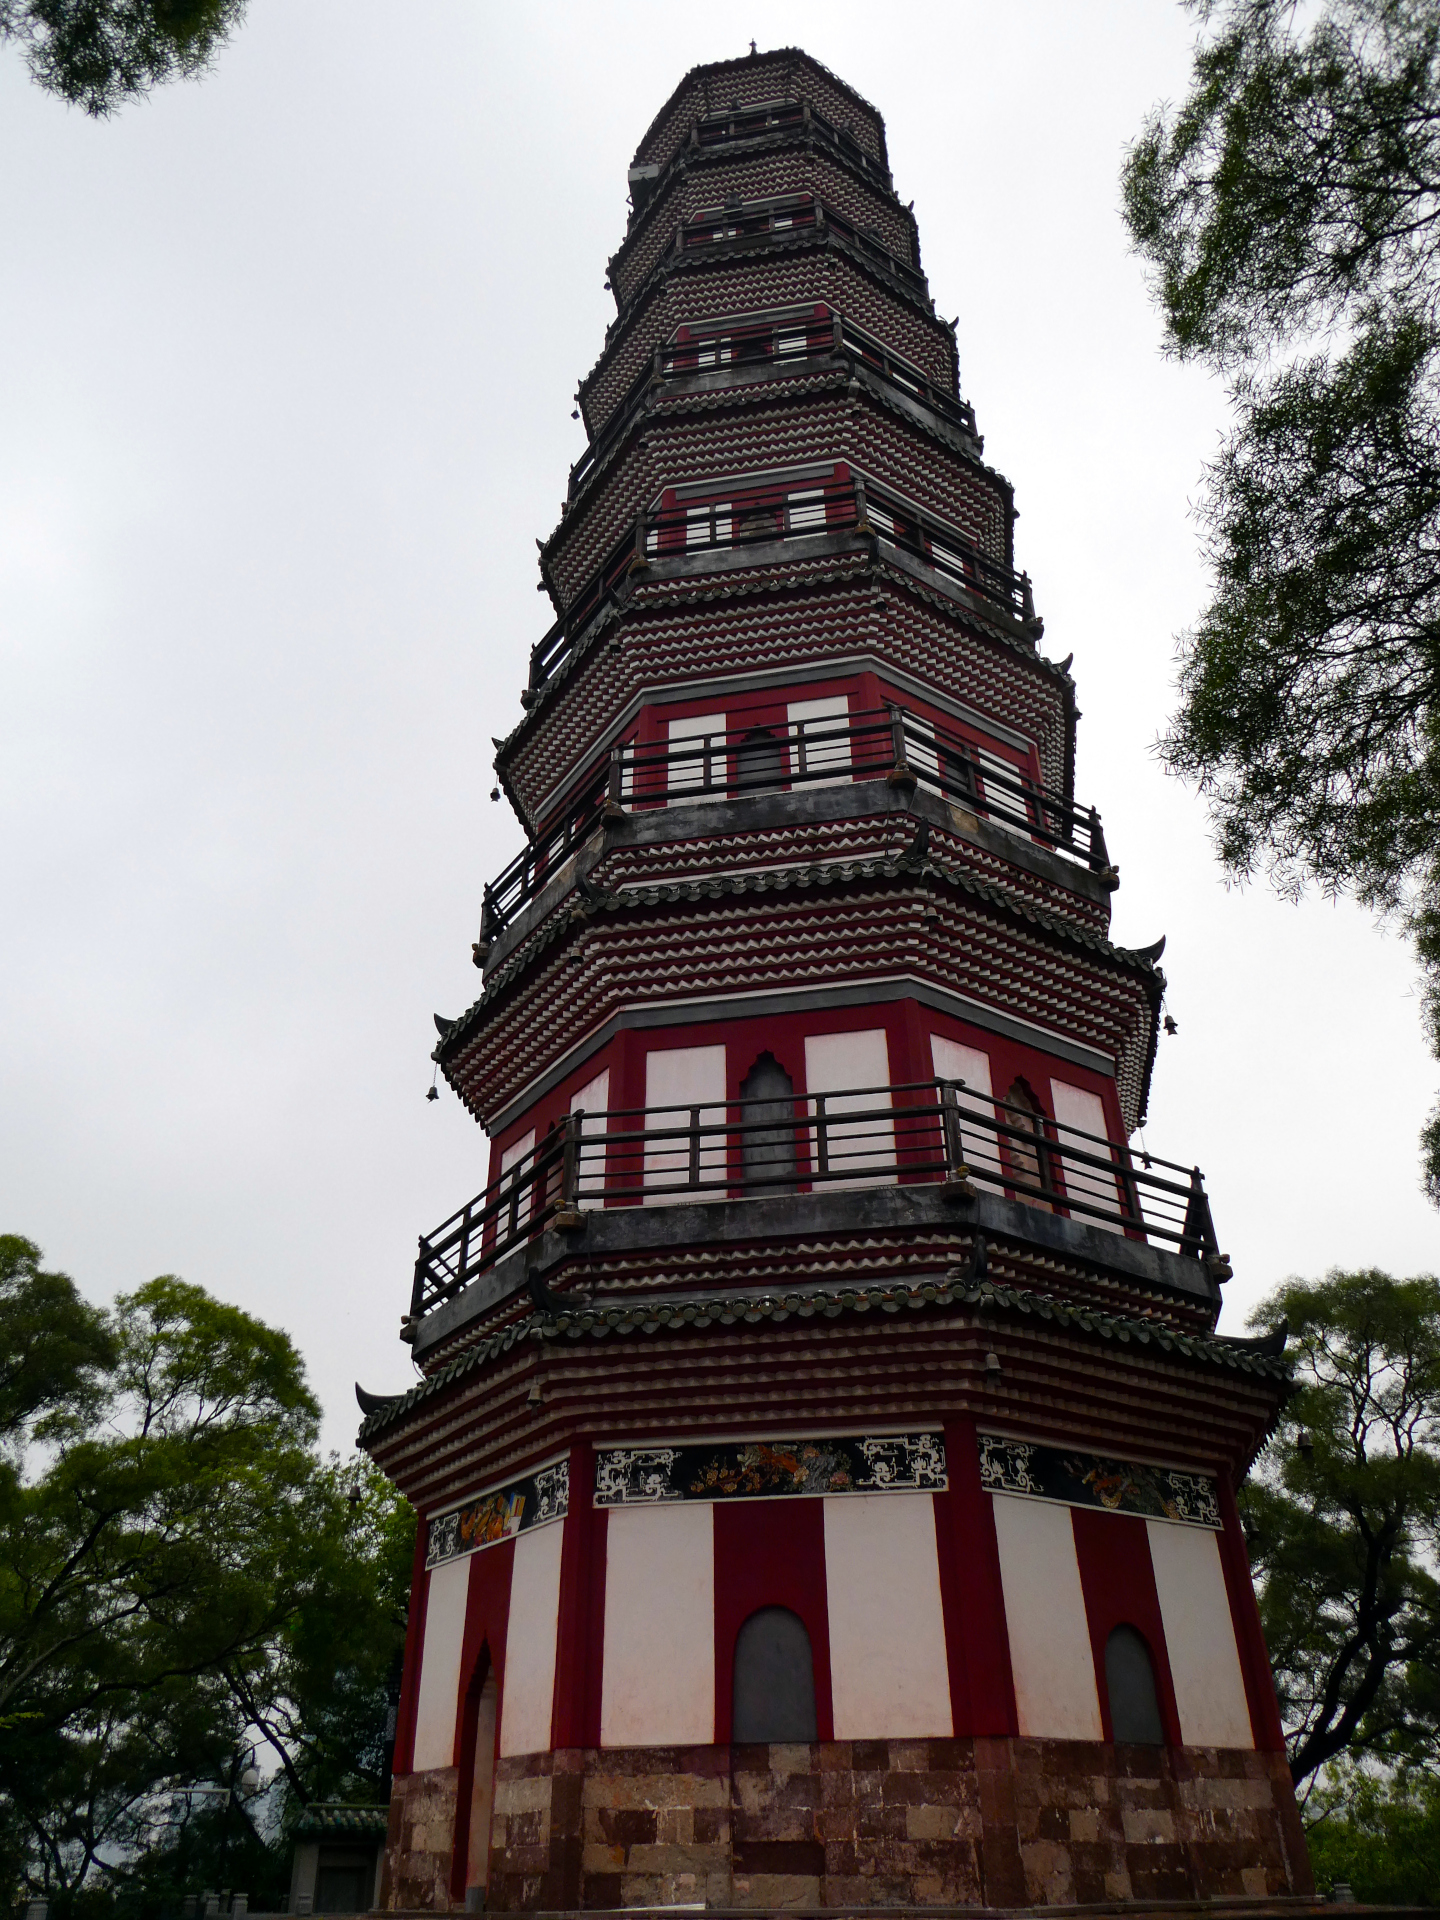 A pagoda